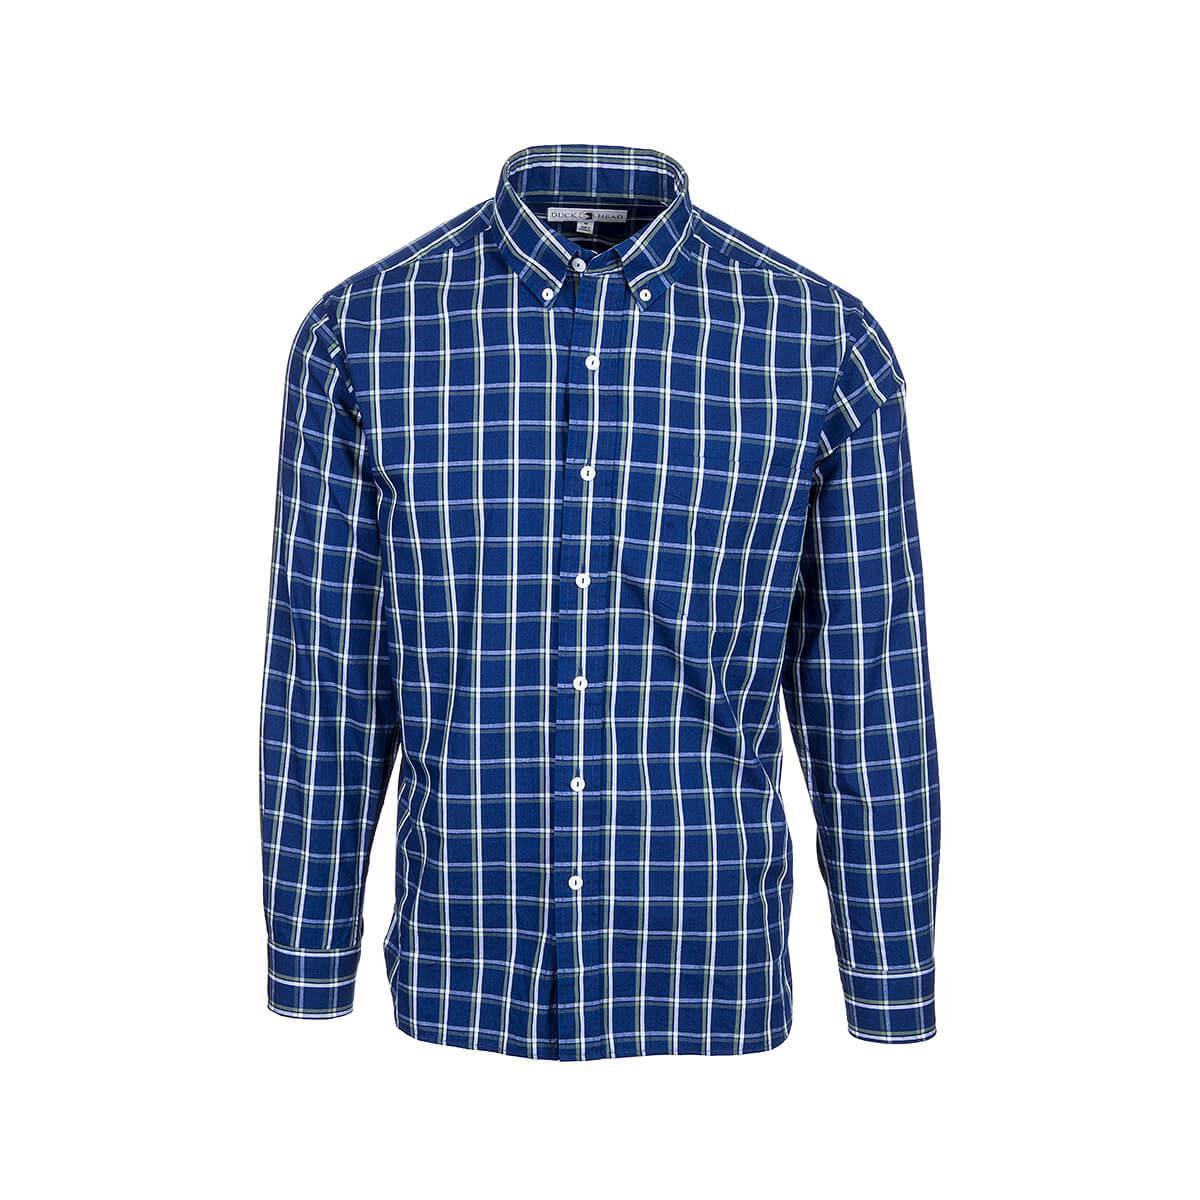  Men's Gerton Plaid Long Sleeve Shirt